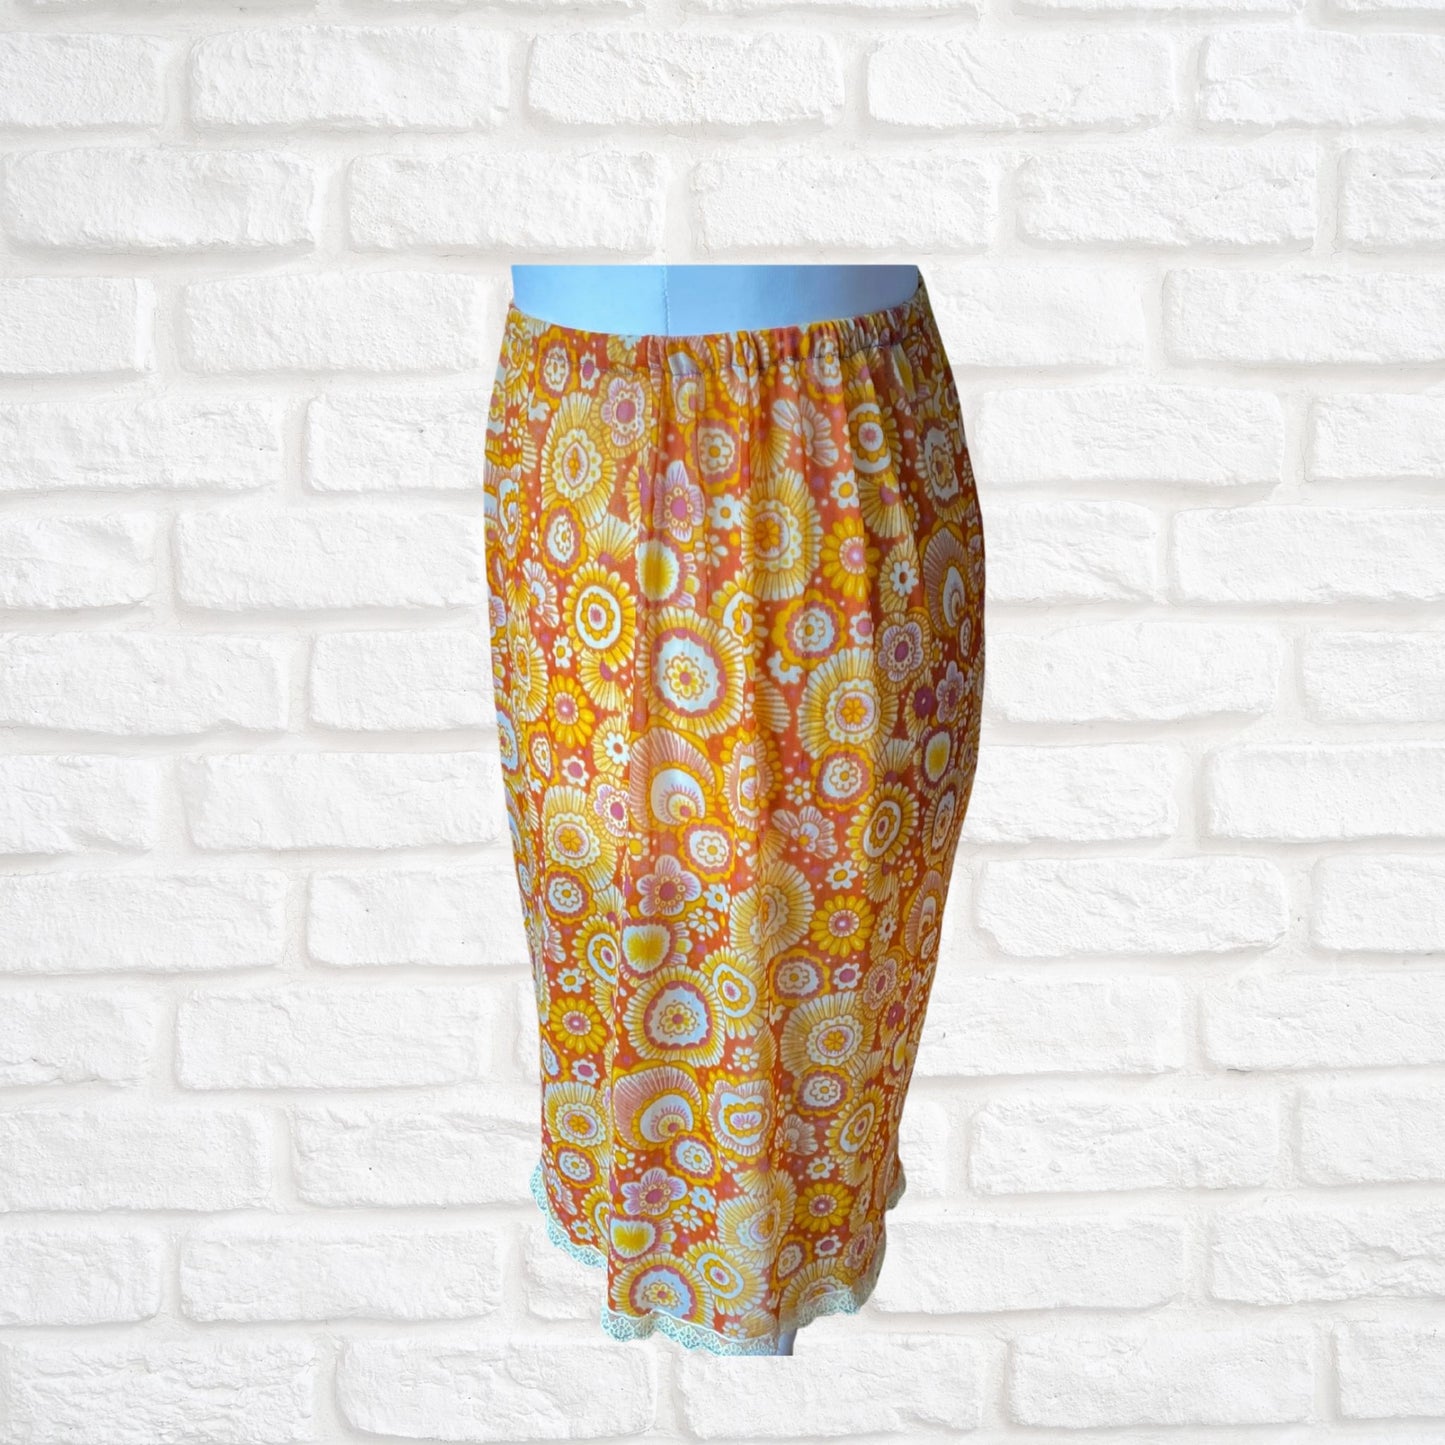 70s yellow and orange psychedelic print waist slip/ skirt. Approx U.K. size 14-20